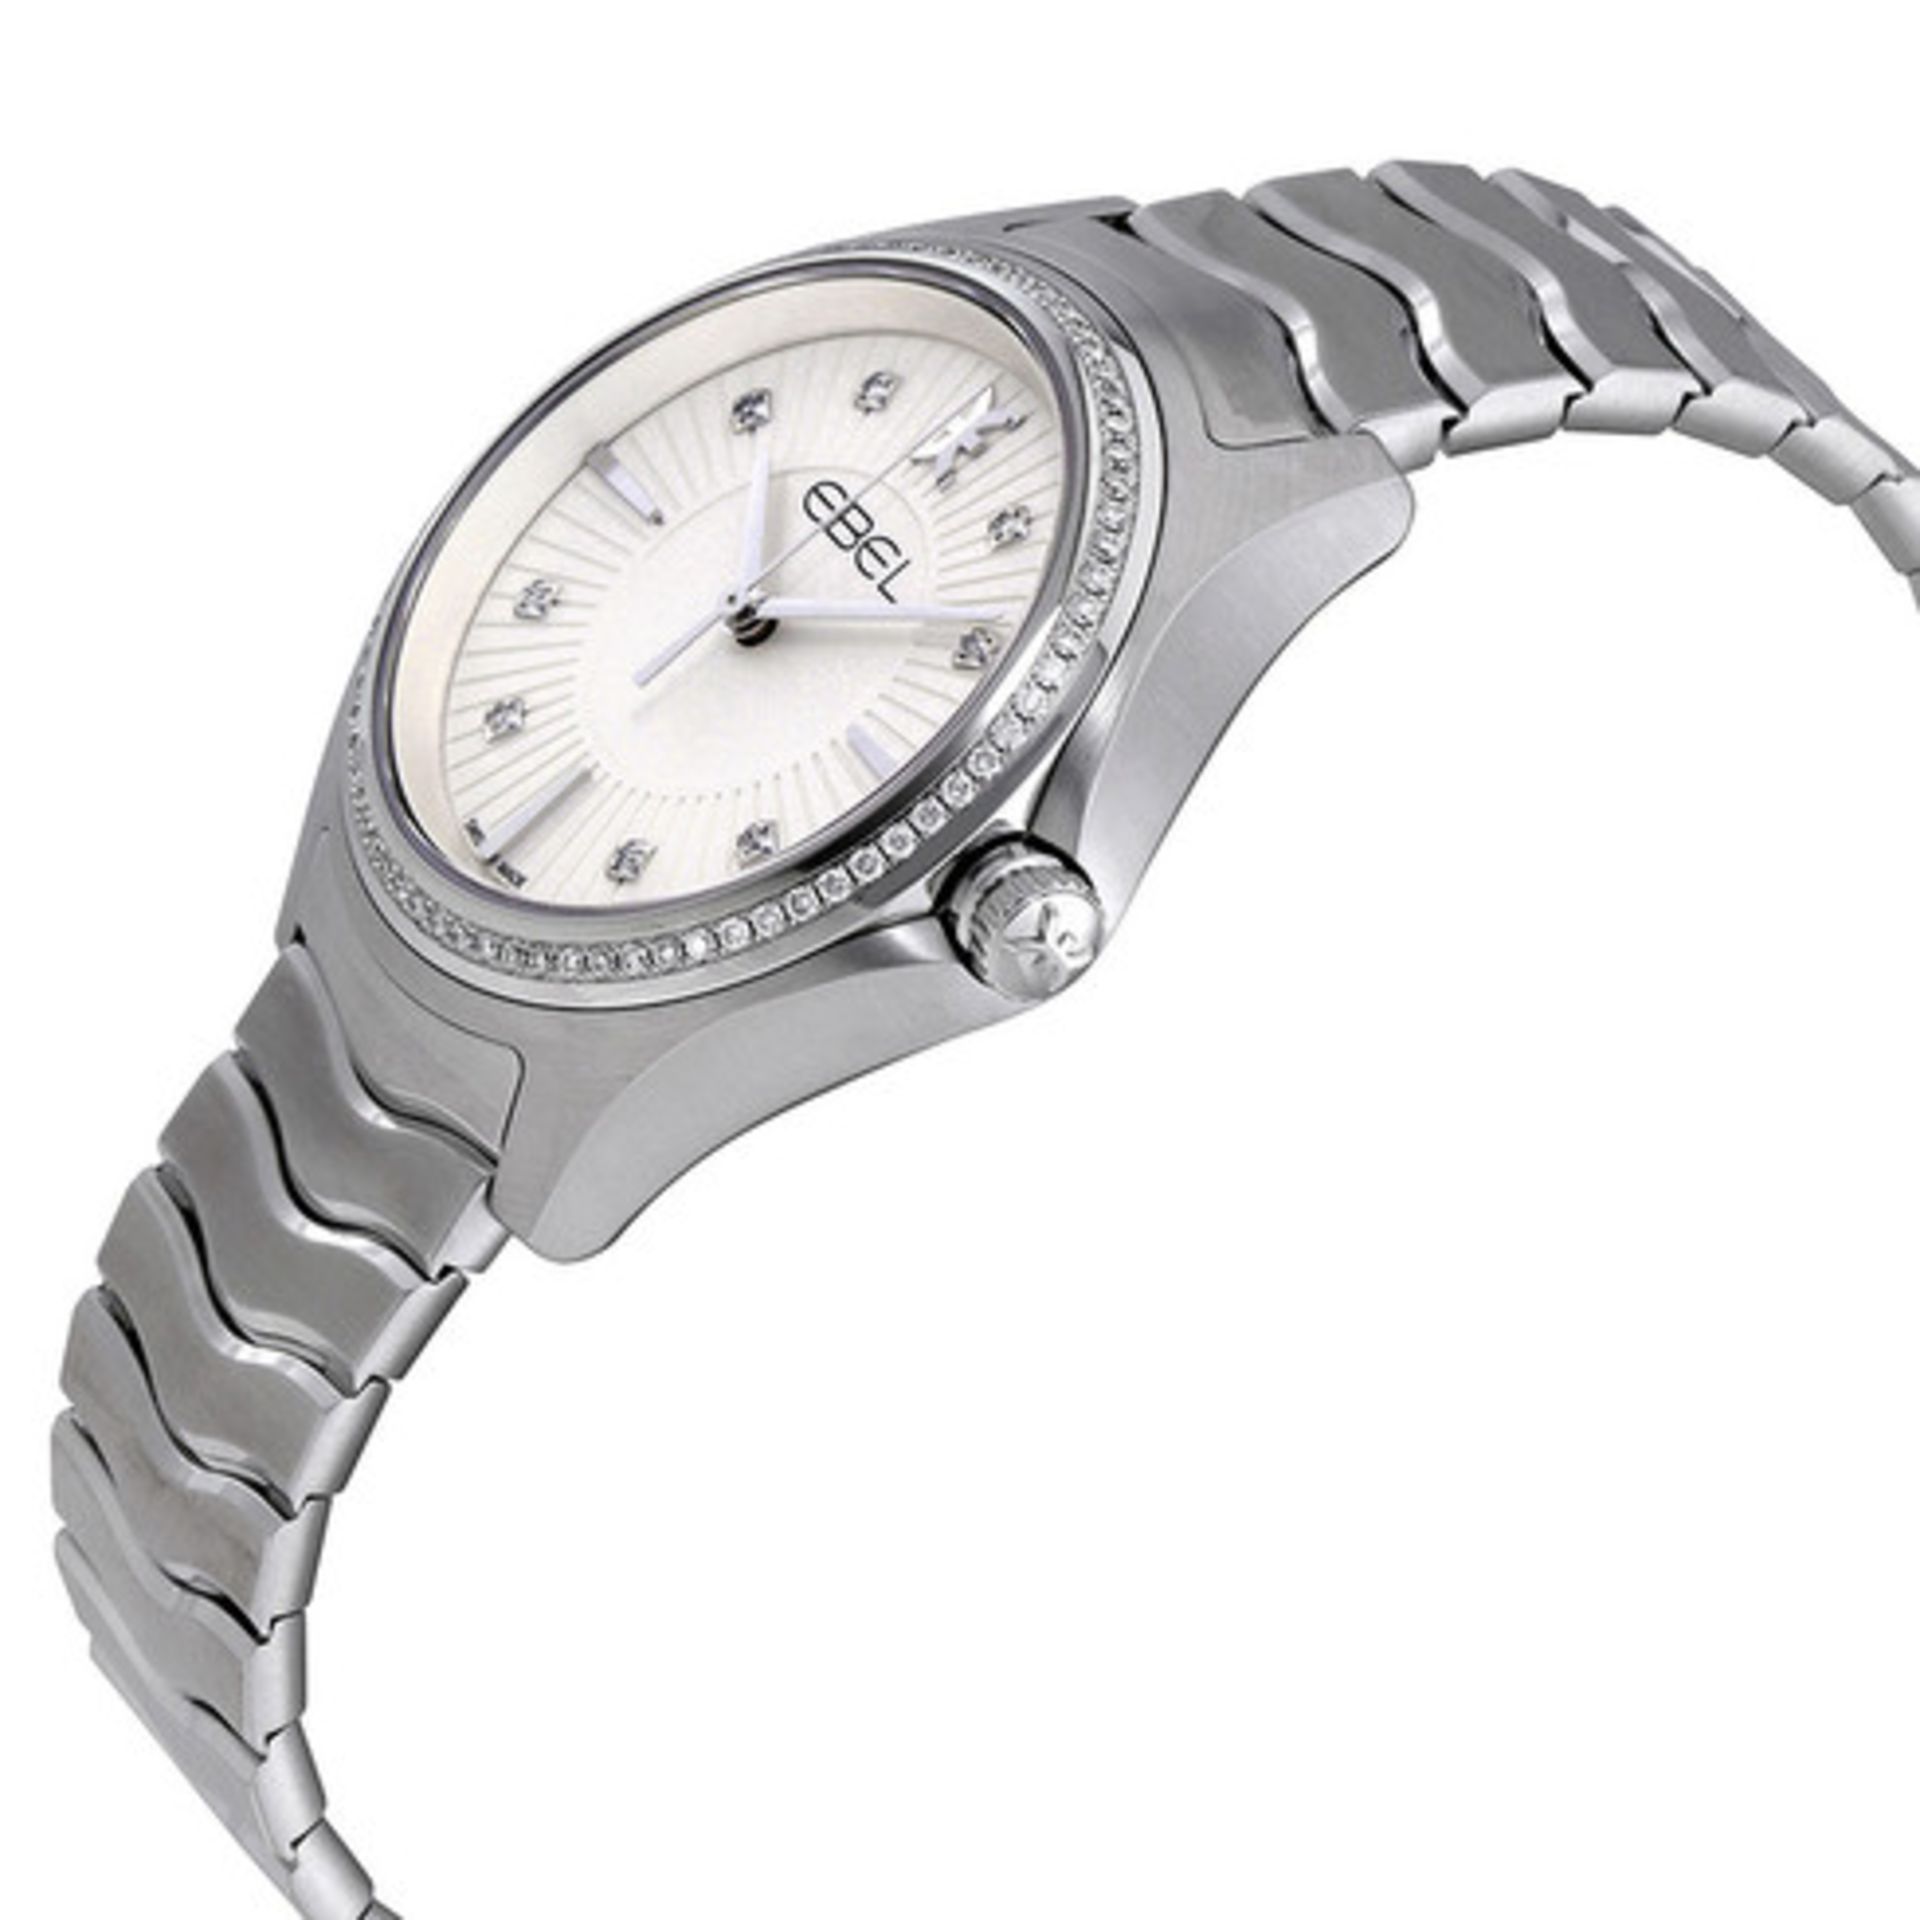 Ebel Ladies Midi 35mm Size Wave Range Watch Reference 1216308, Stainless Steel Bracelet & Case, - Image 3 of 6